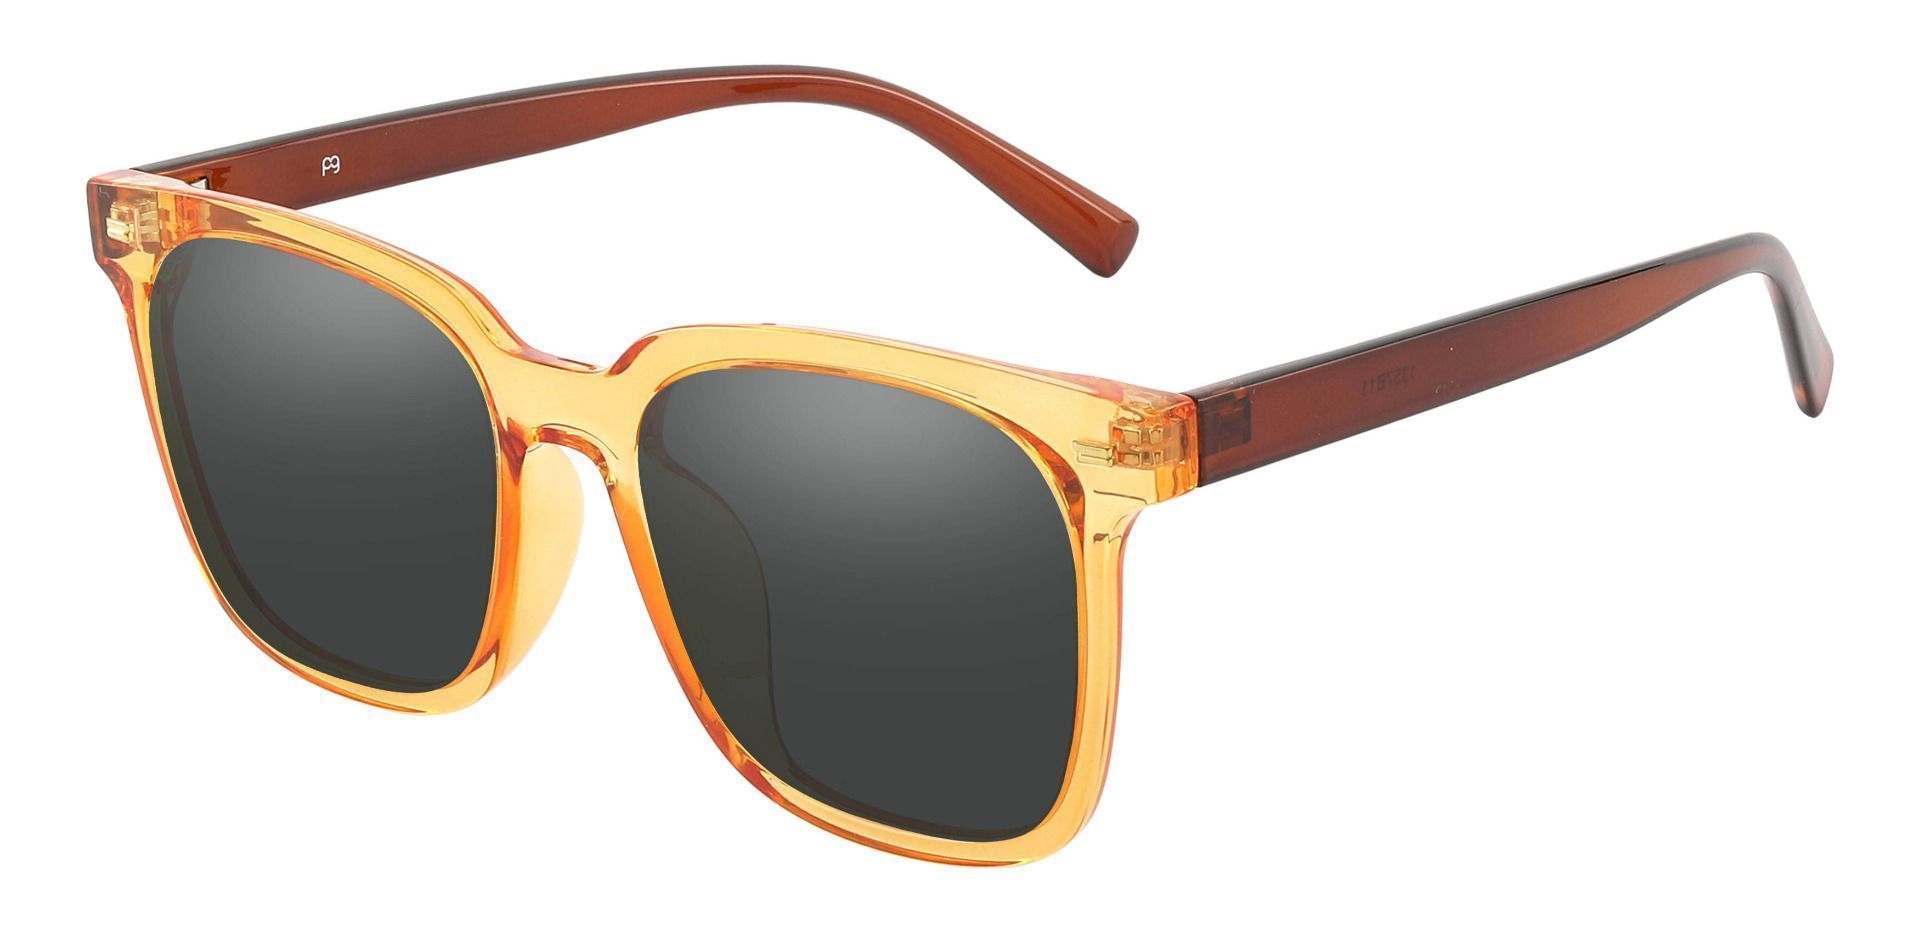 Charlie Square Prescription Sunglasses - Orange Frame With Gray Lenses